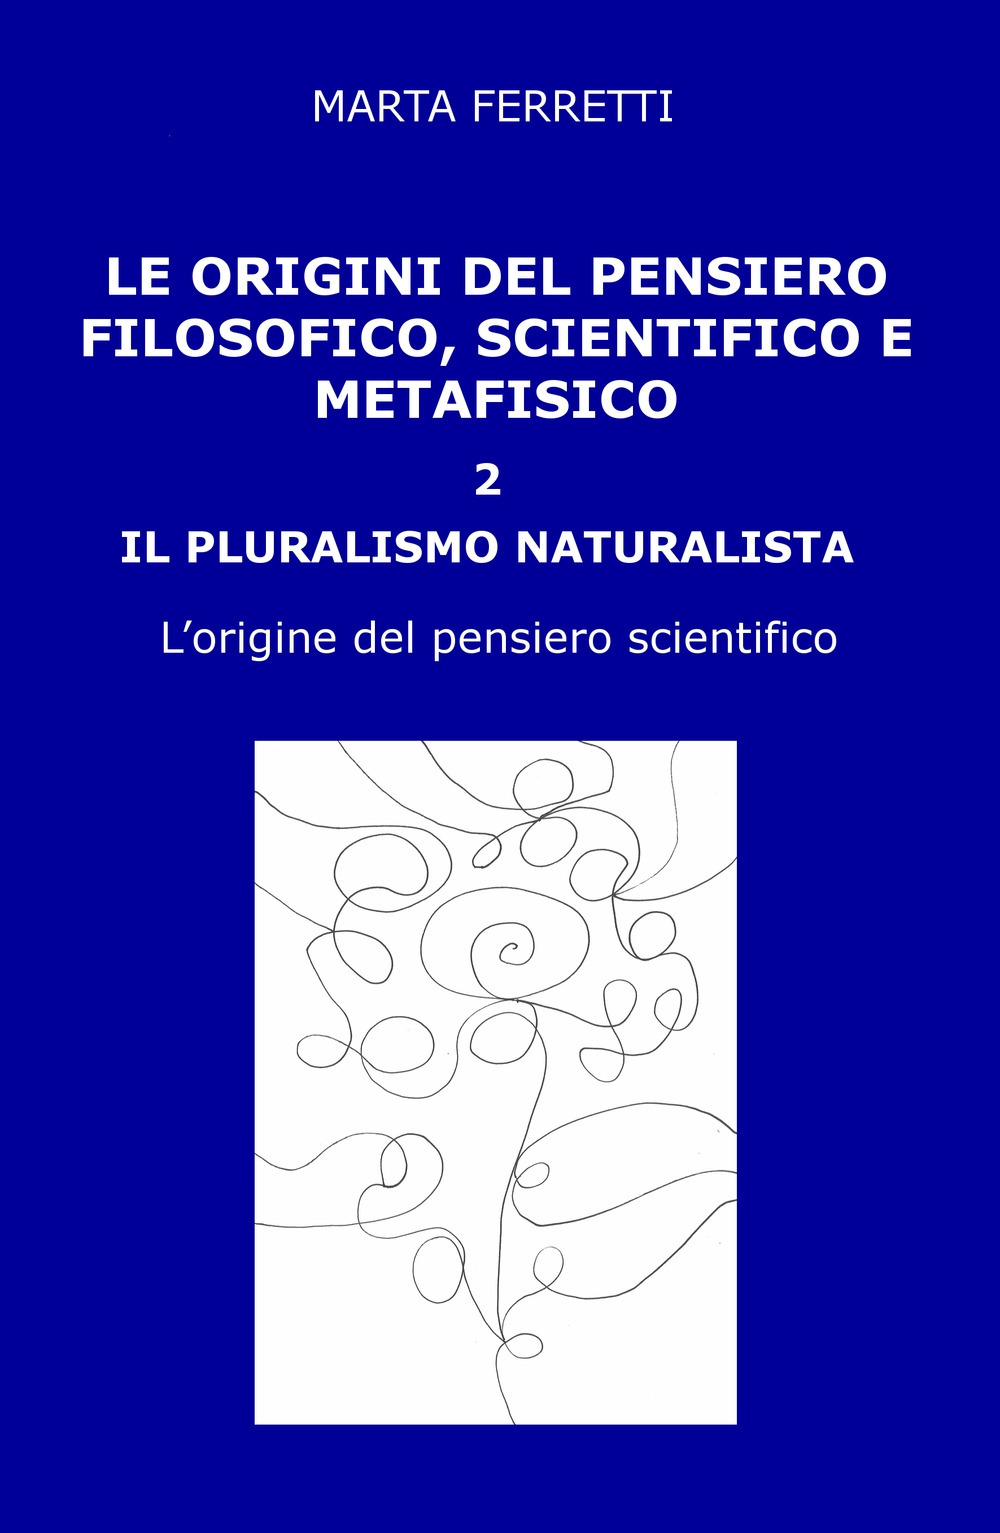 Le origini del pensiero filosofico, scientifico e metafisico. Vol. 2: Il pluralismo naturalista. L'origine del pensiero scientifico